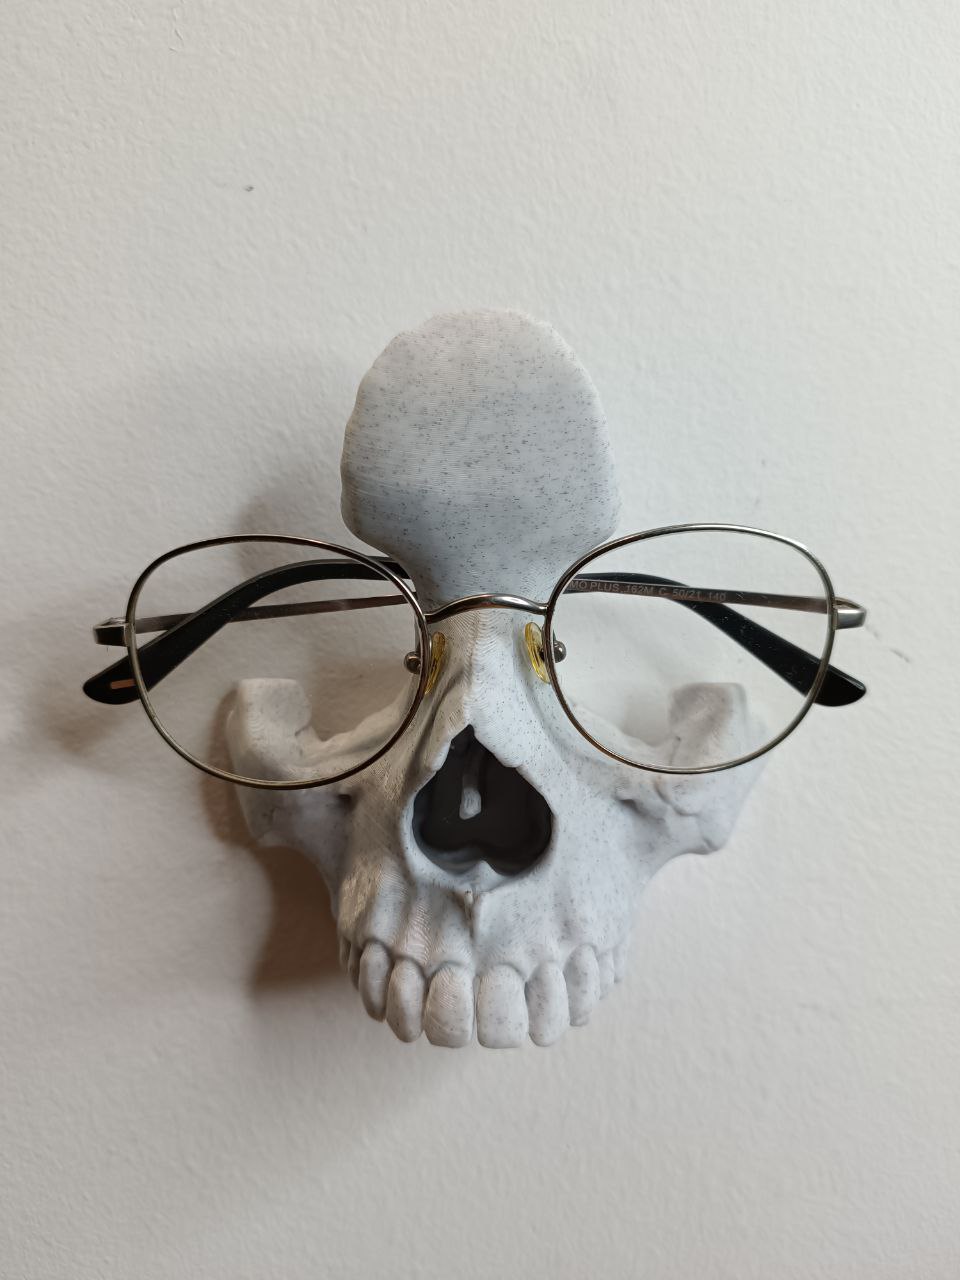 Skull holder for glasses / Cráneo soporte para gafas by Eleazar 3DinPlastic, Download free STL model